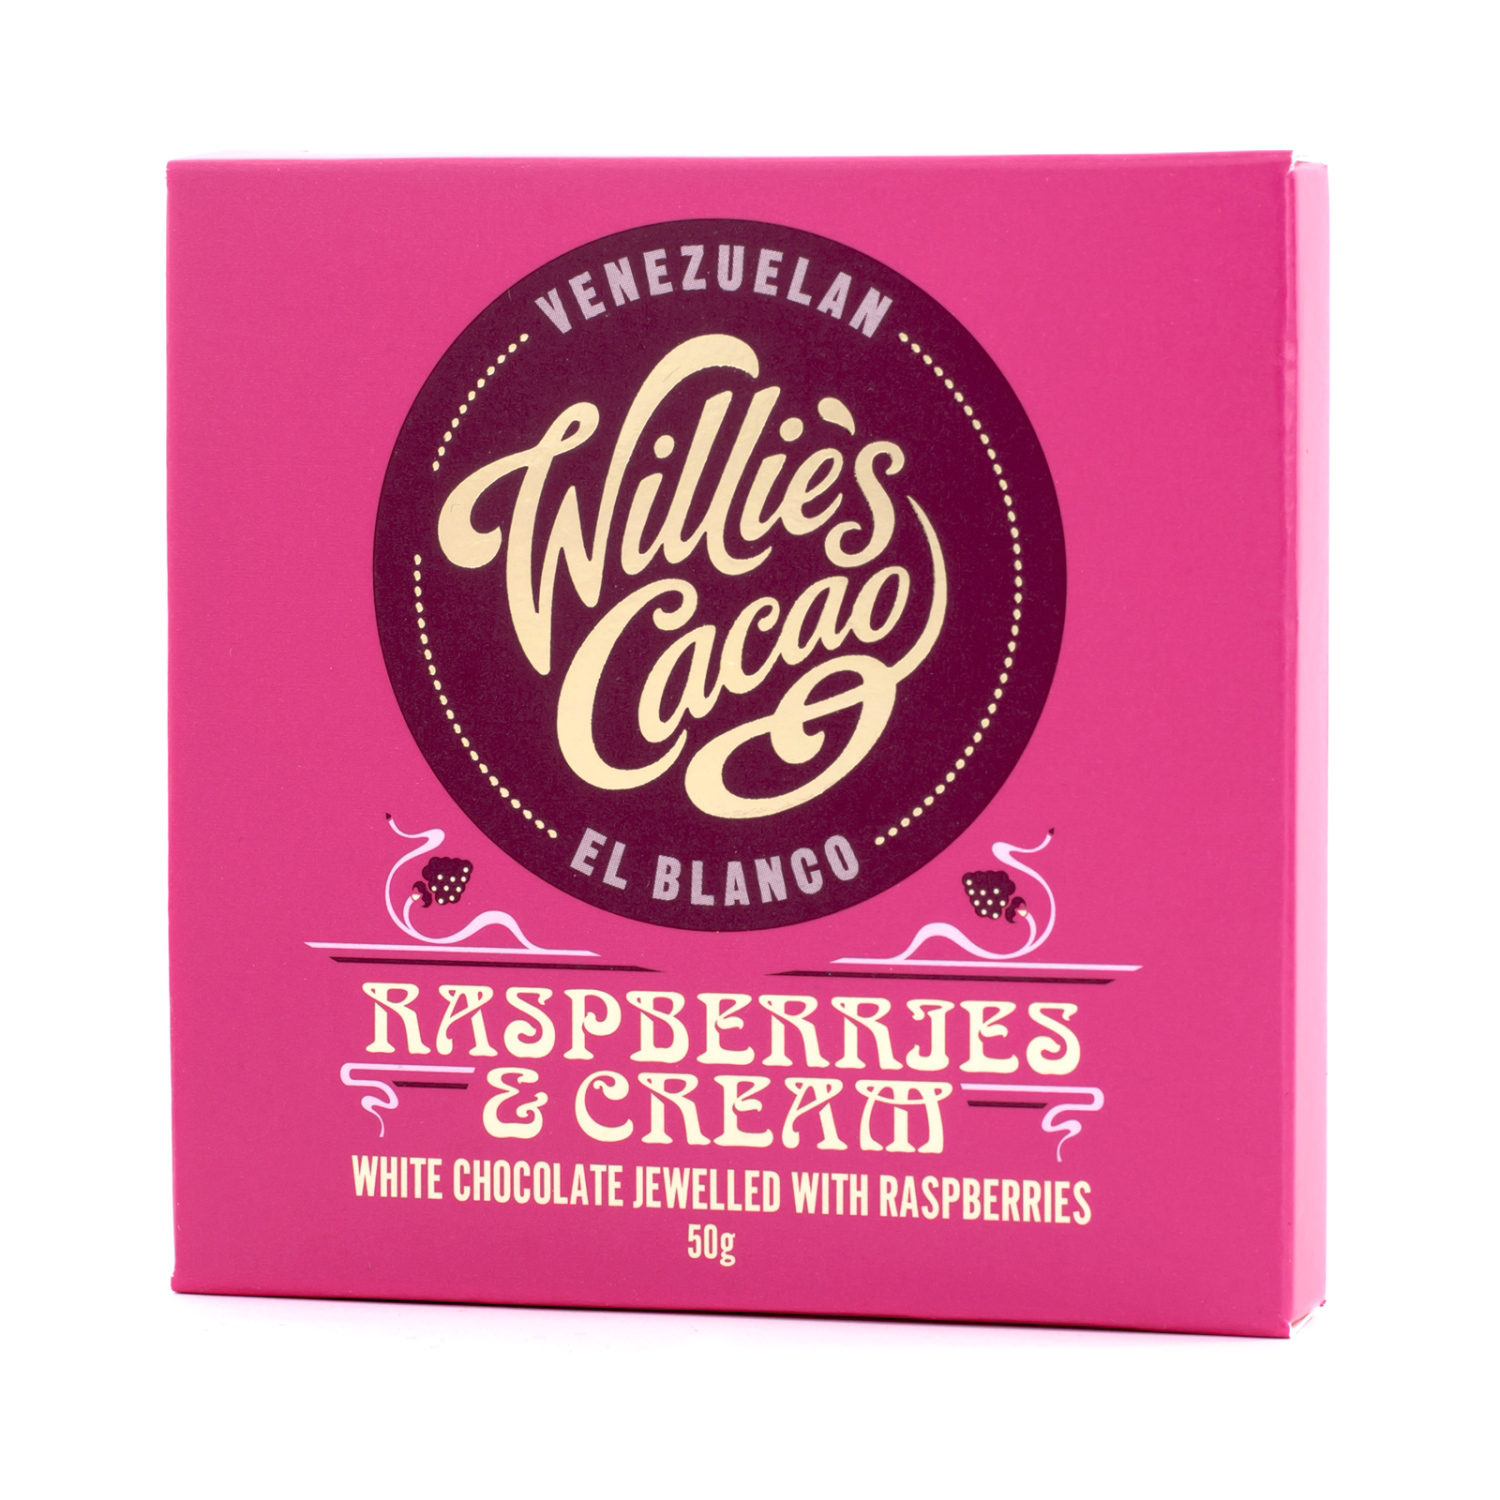 Willie's Cacao - Raspberries and Cream White Chocolate 50g